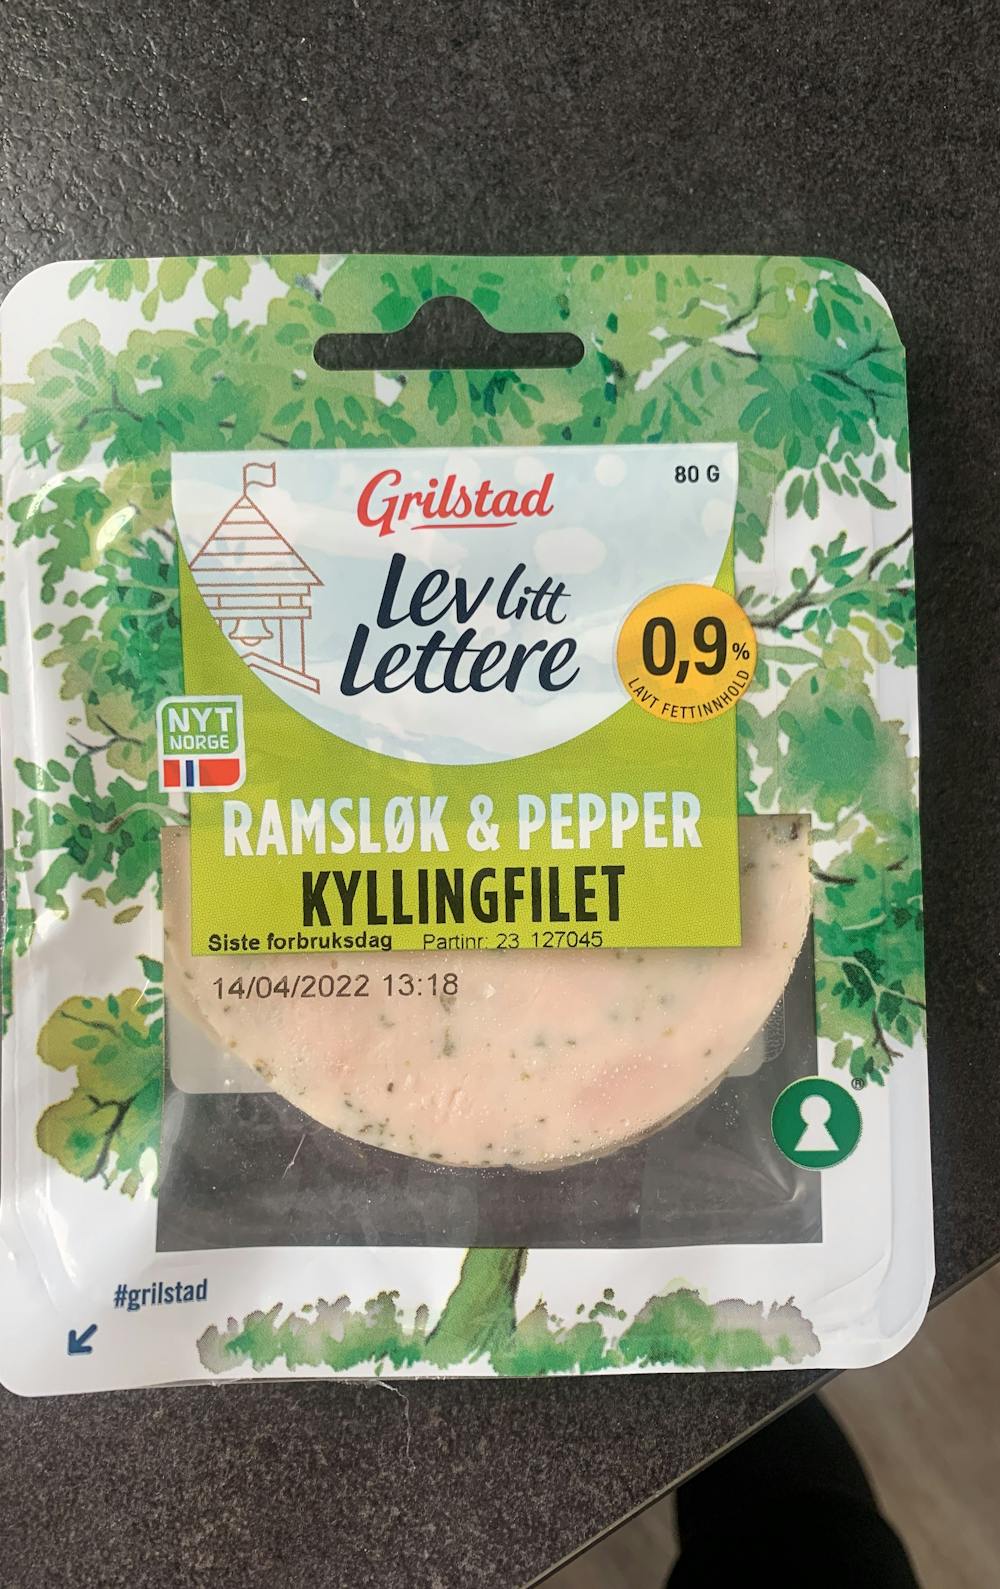 Ramsløk & pepper kyllingfilet, Grilstad 